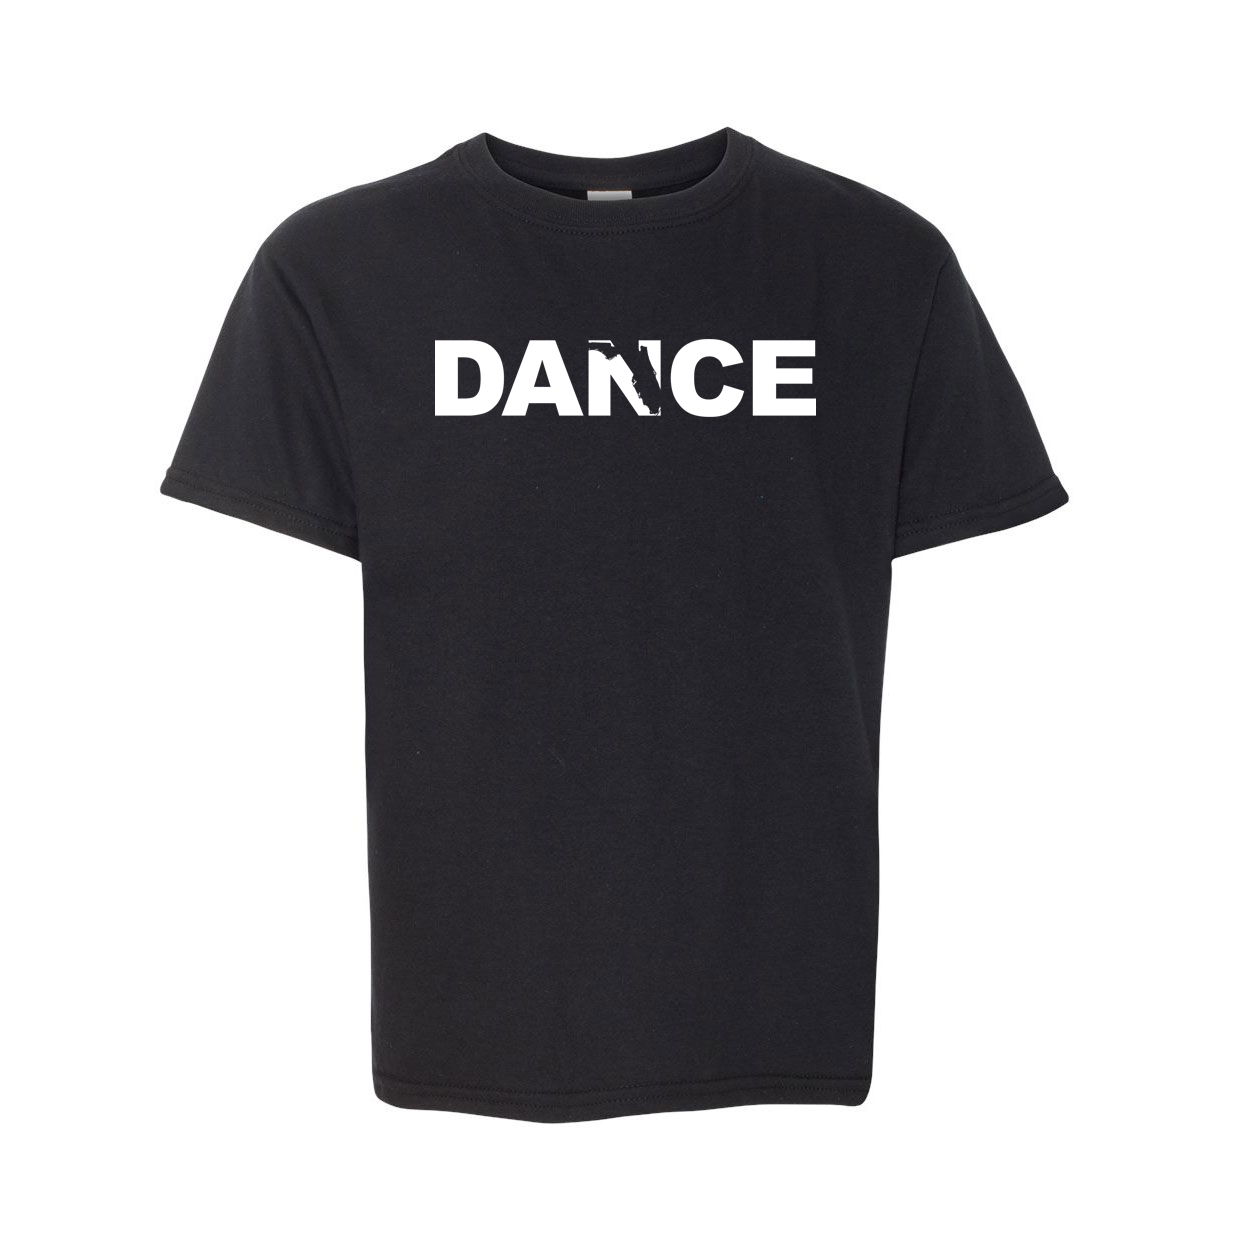 Dance Florida Classic Youth T-Shirt Black (White Logo)